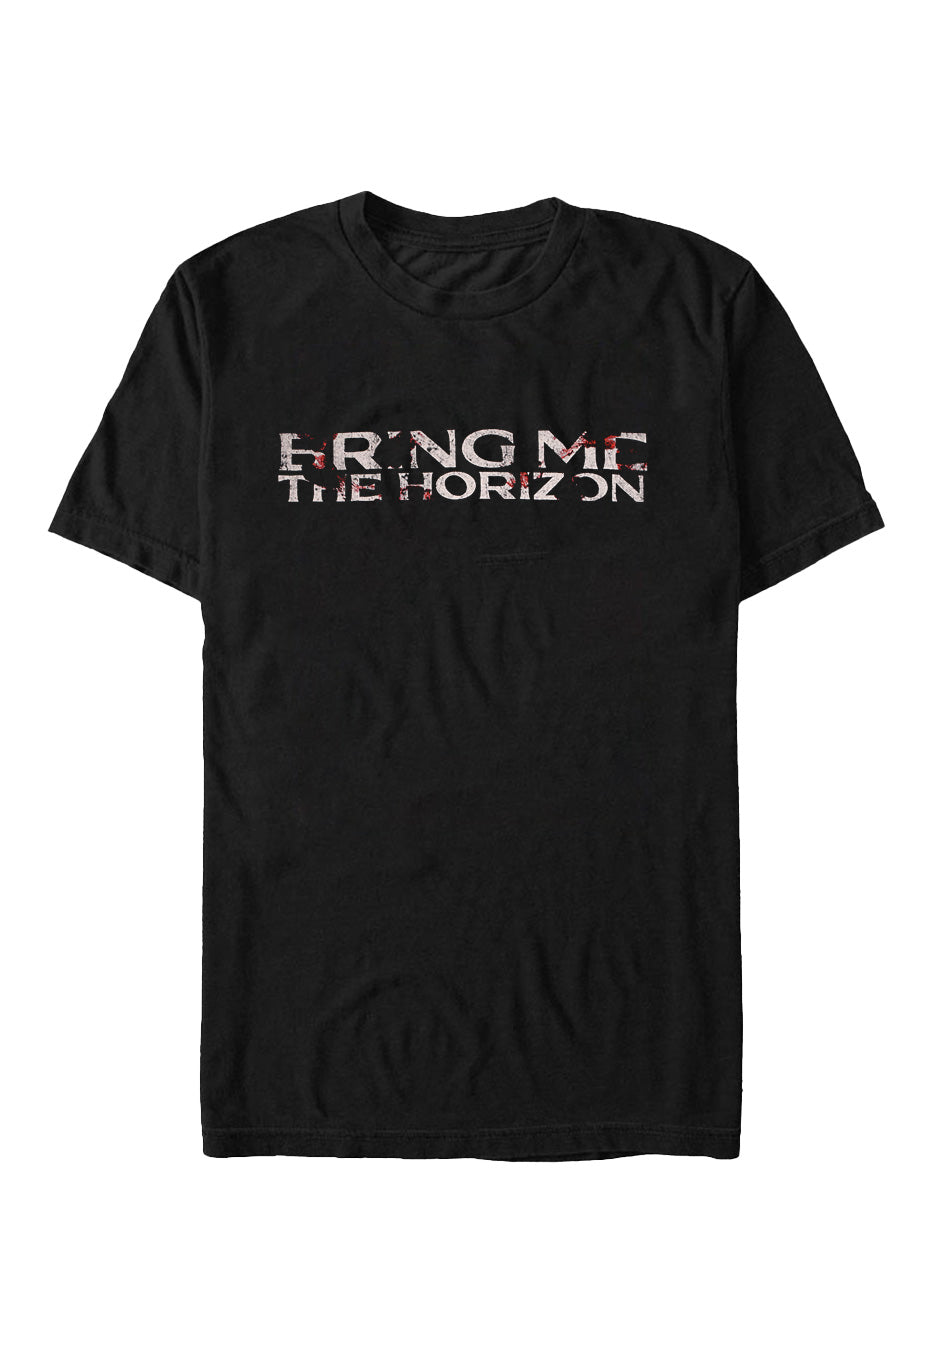 Bring Me The Horizon - Symbols - T-Shirt